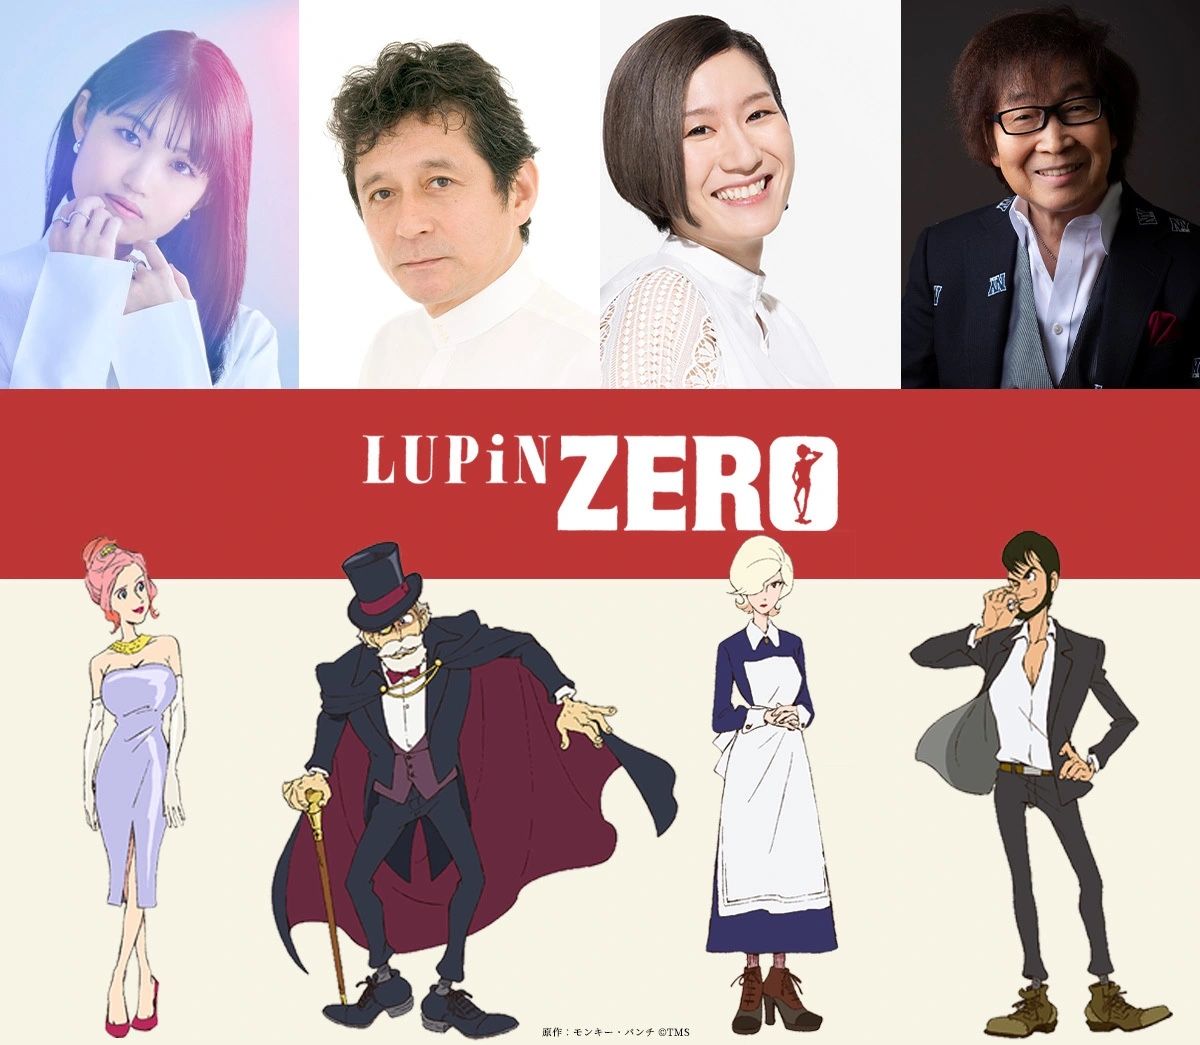 Lupin Zero Characters 